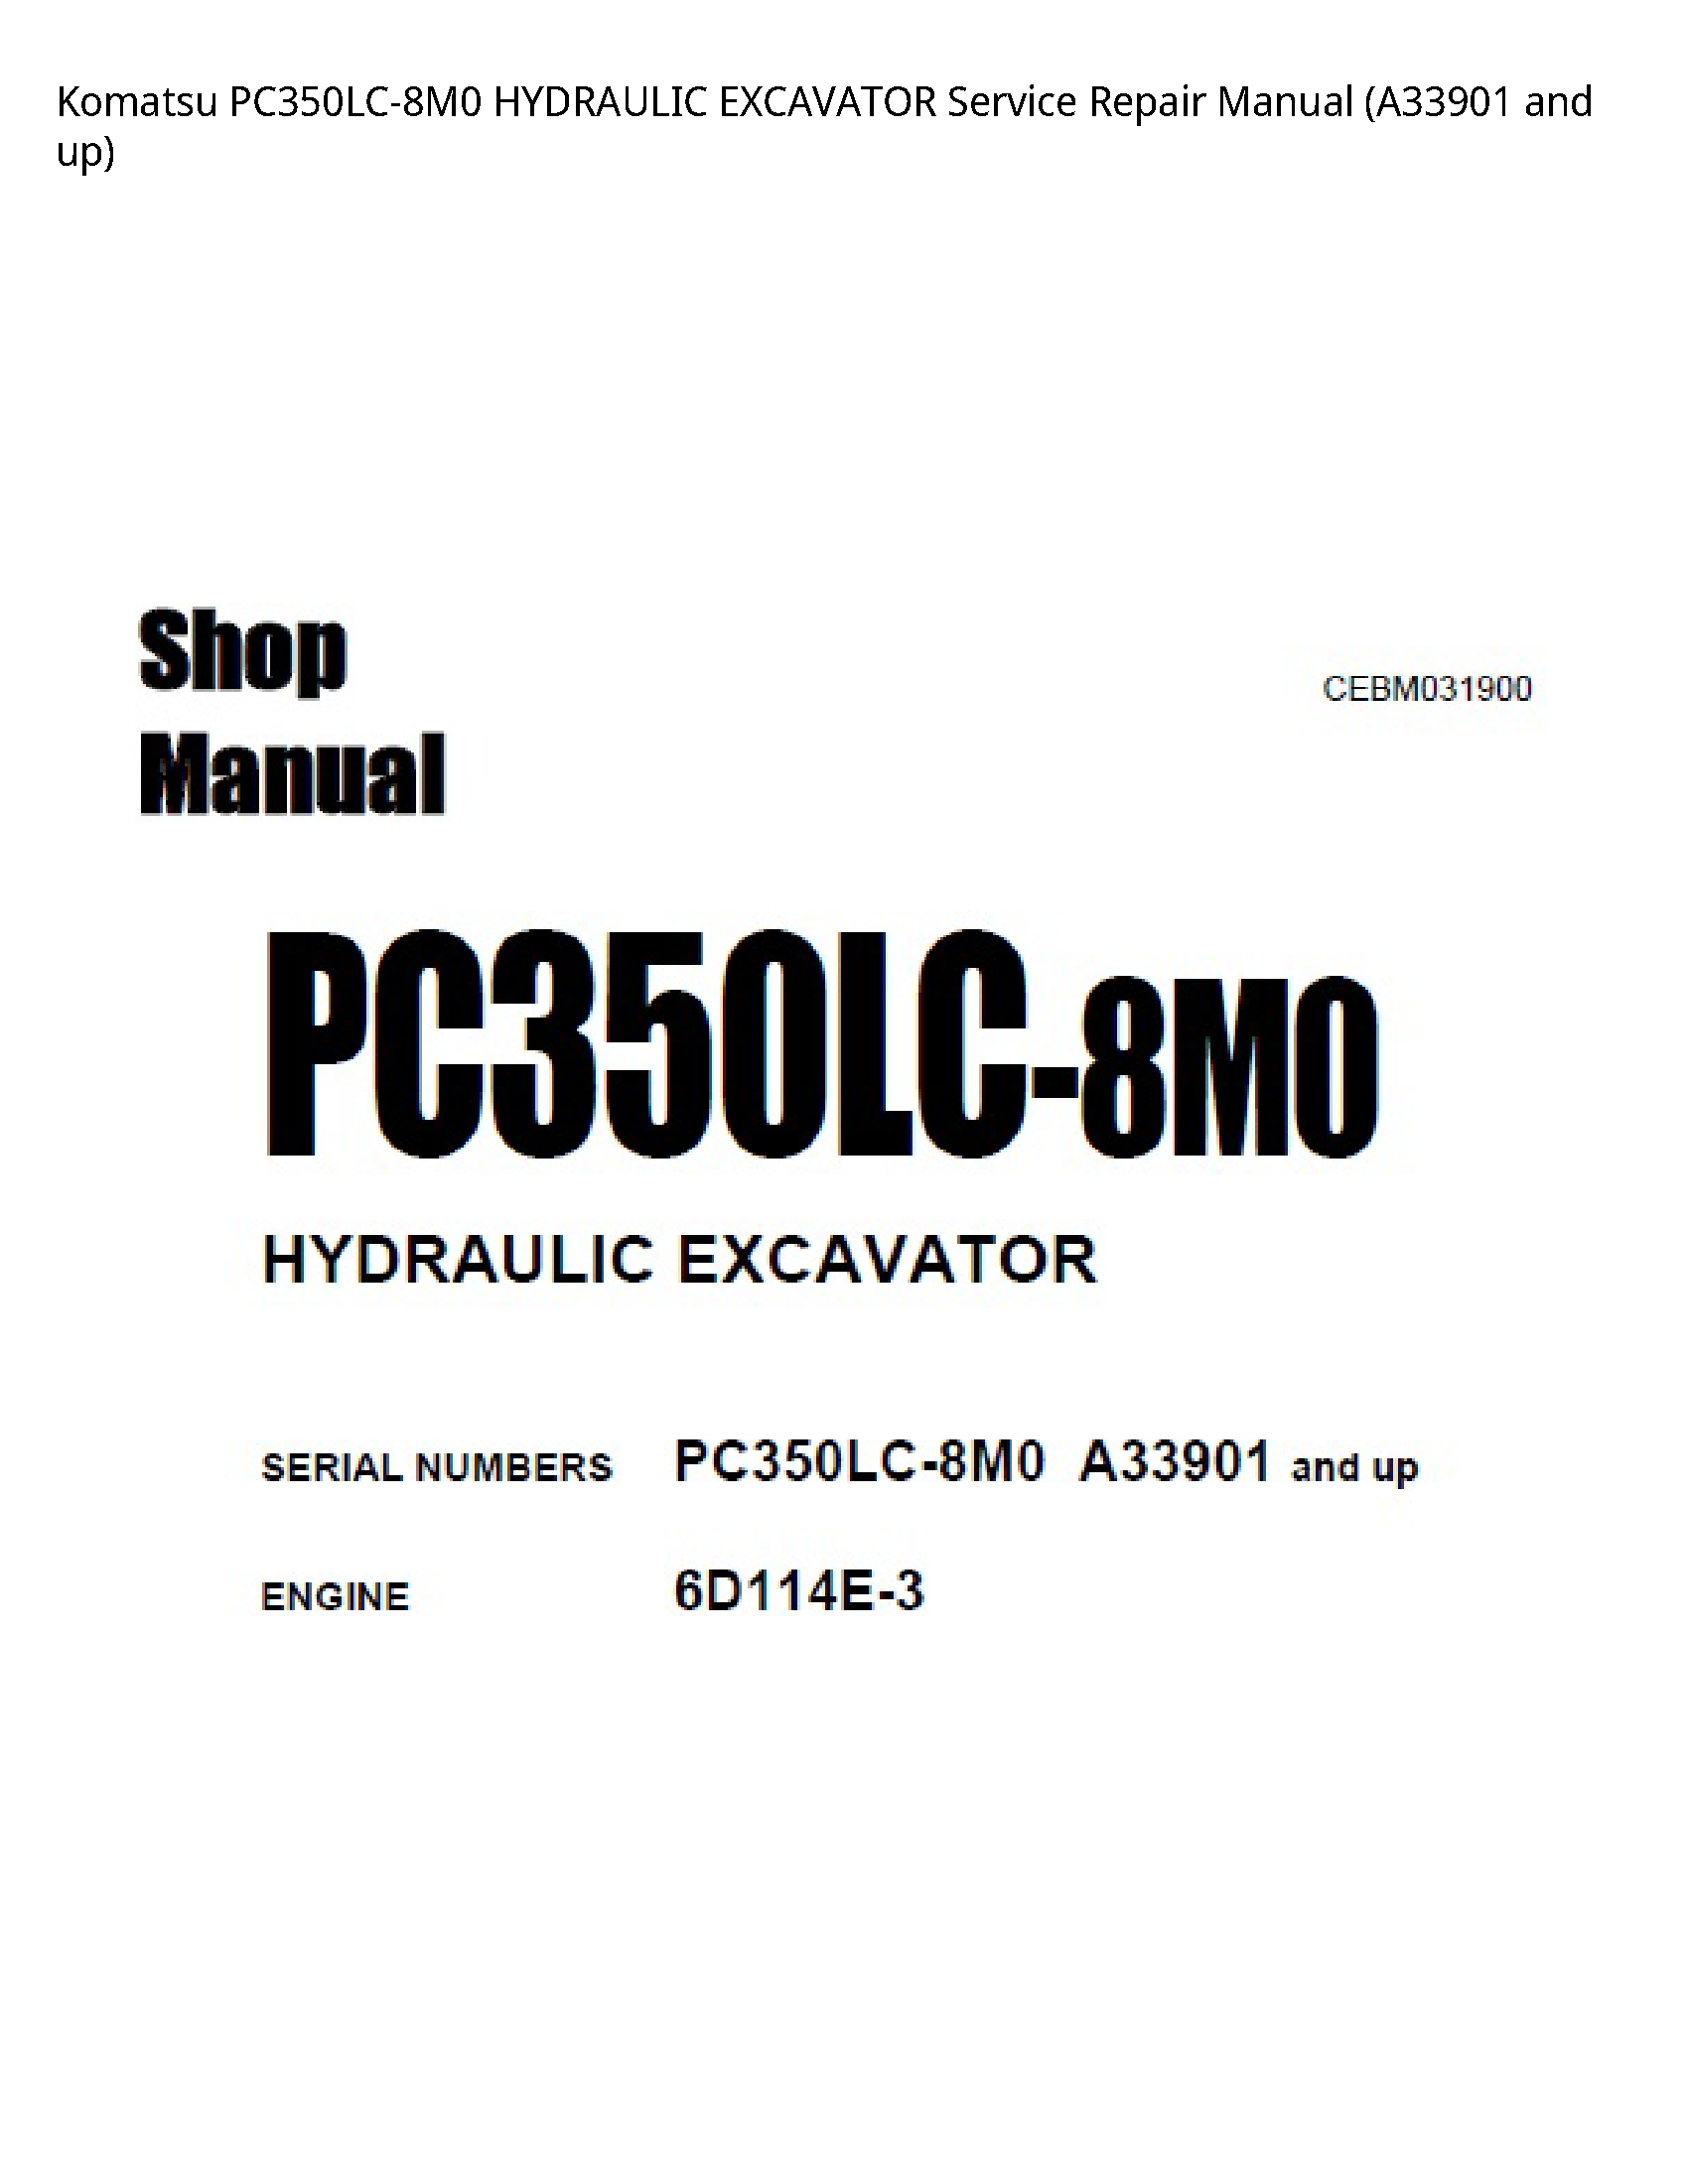 KOMATSU PC350LC-8M0 HYDRAULIC EXCAVATOR manual